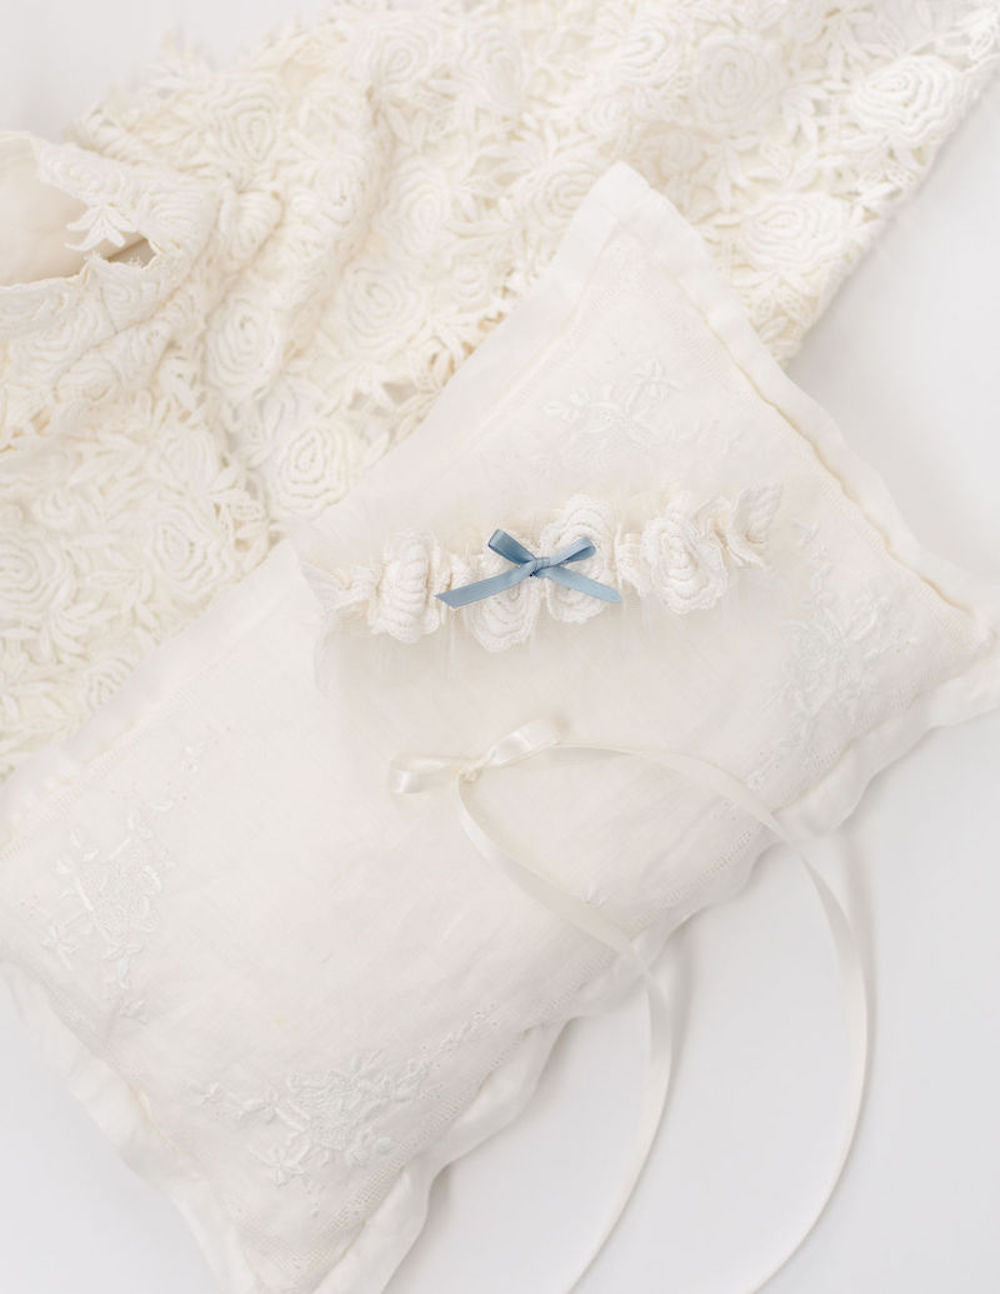 custom wedding garter heirloom and ring pillow made from grandmother's handkerchief by The Garter Girl